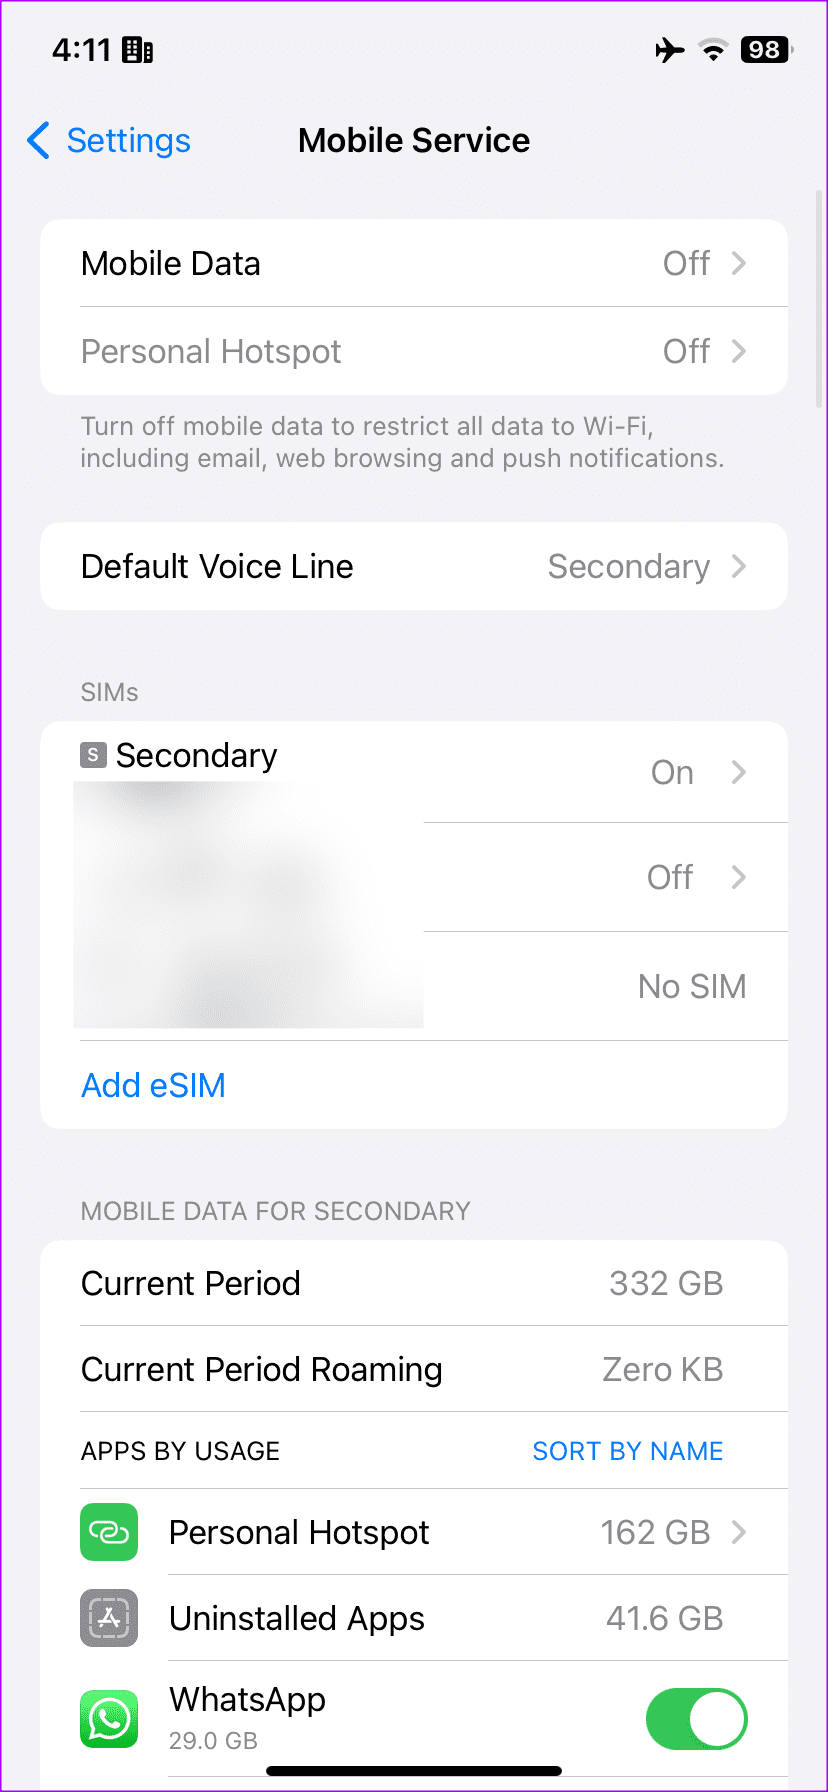 select mobile service